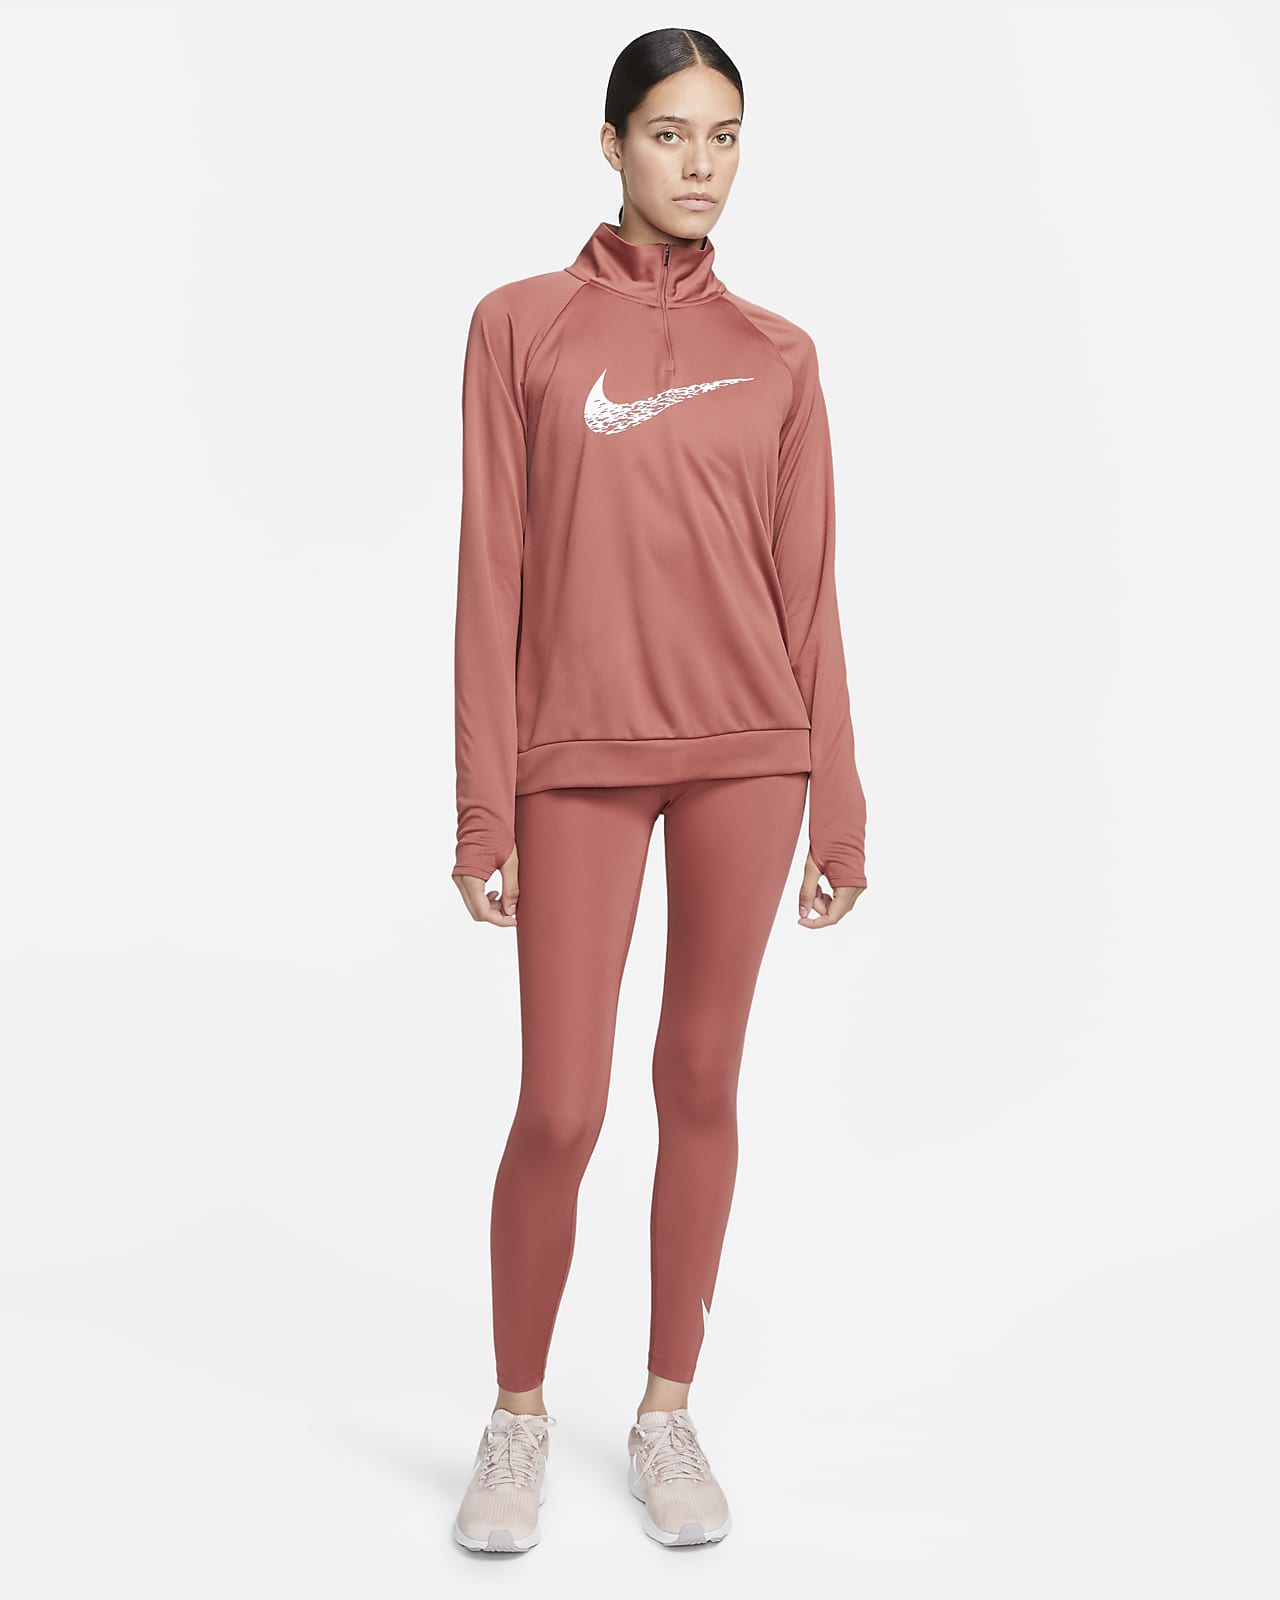 Купить Леггинсы Nike Dri-fit Swoosh Run Mid-rise 7/8 Running Pink